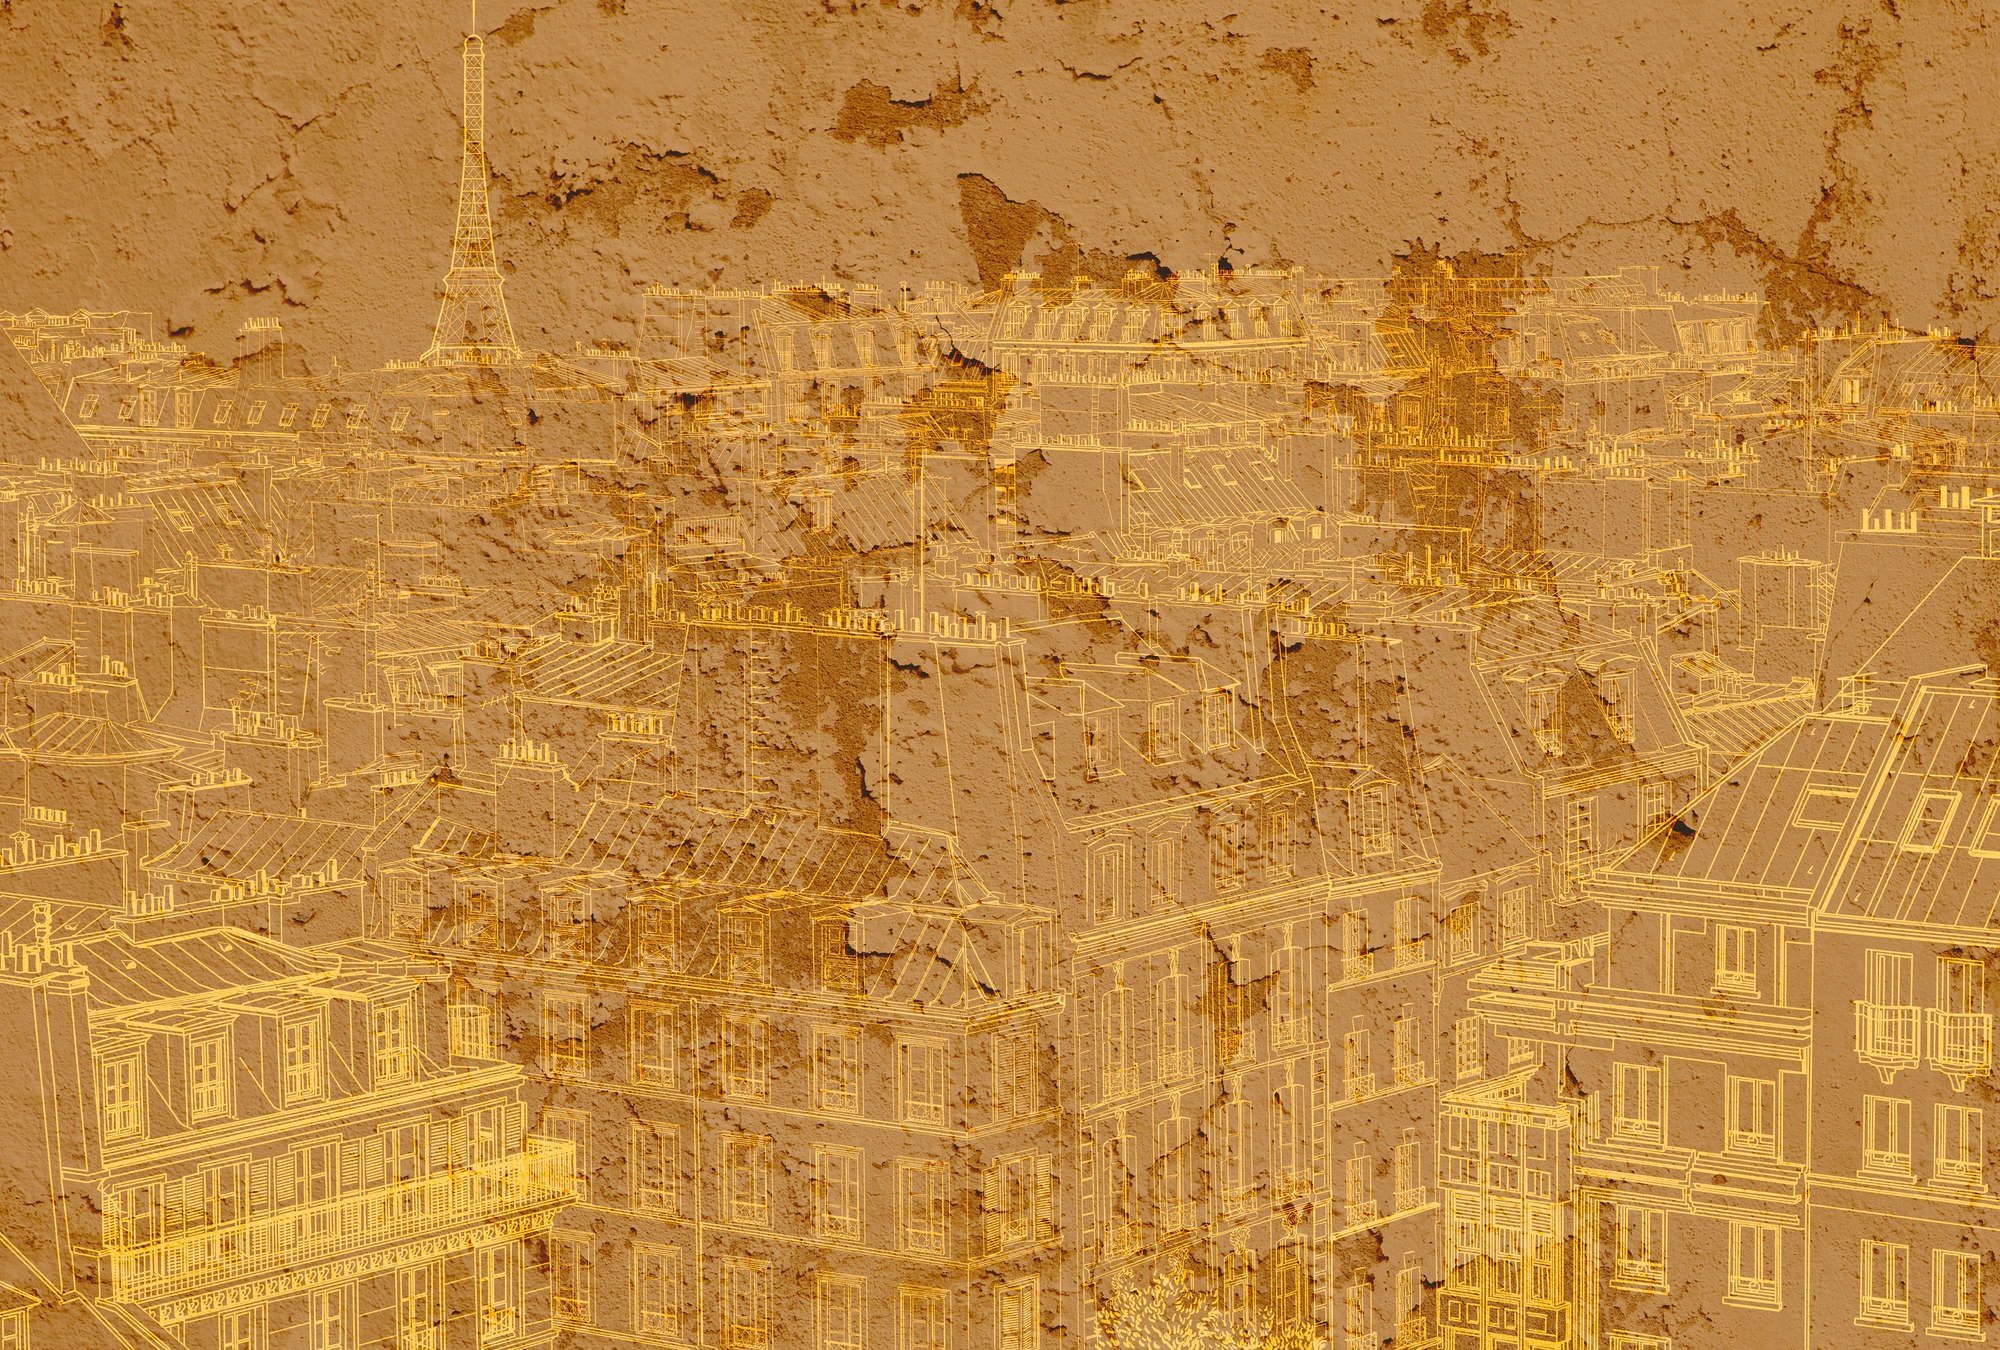             Photo wallpaper skyline Paris blueprints design - orange, yellow
        